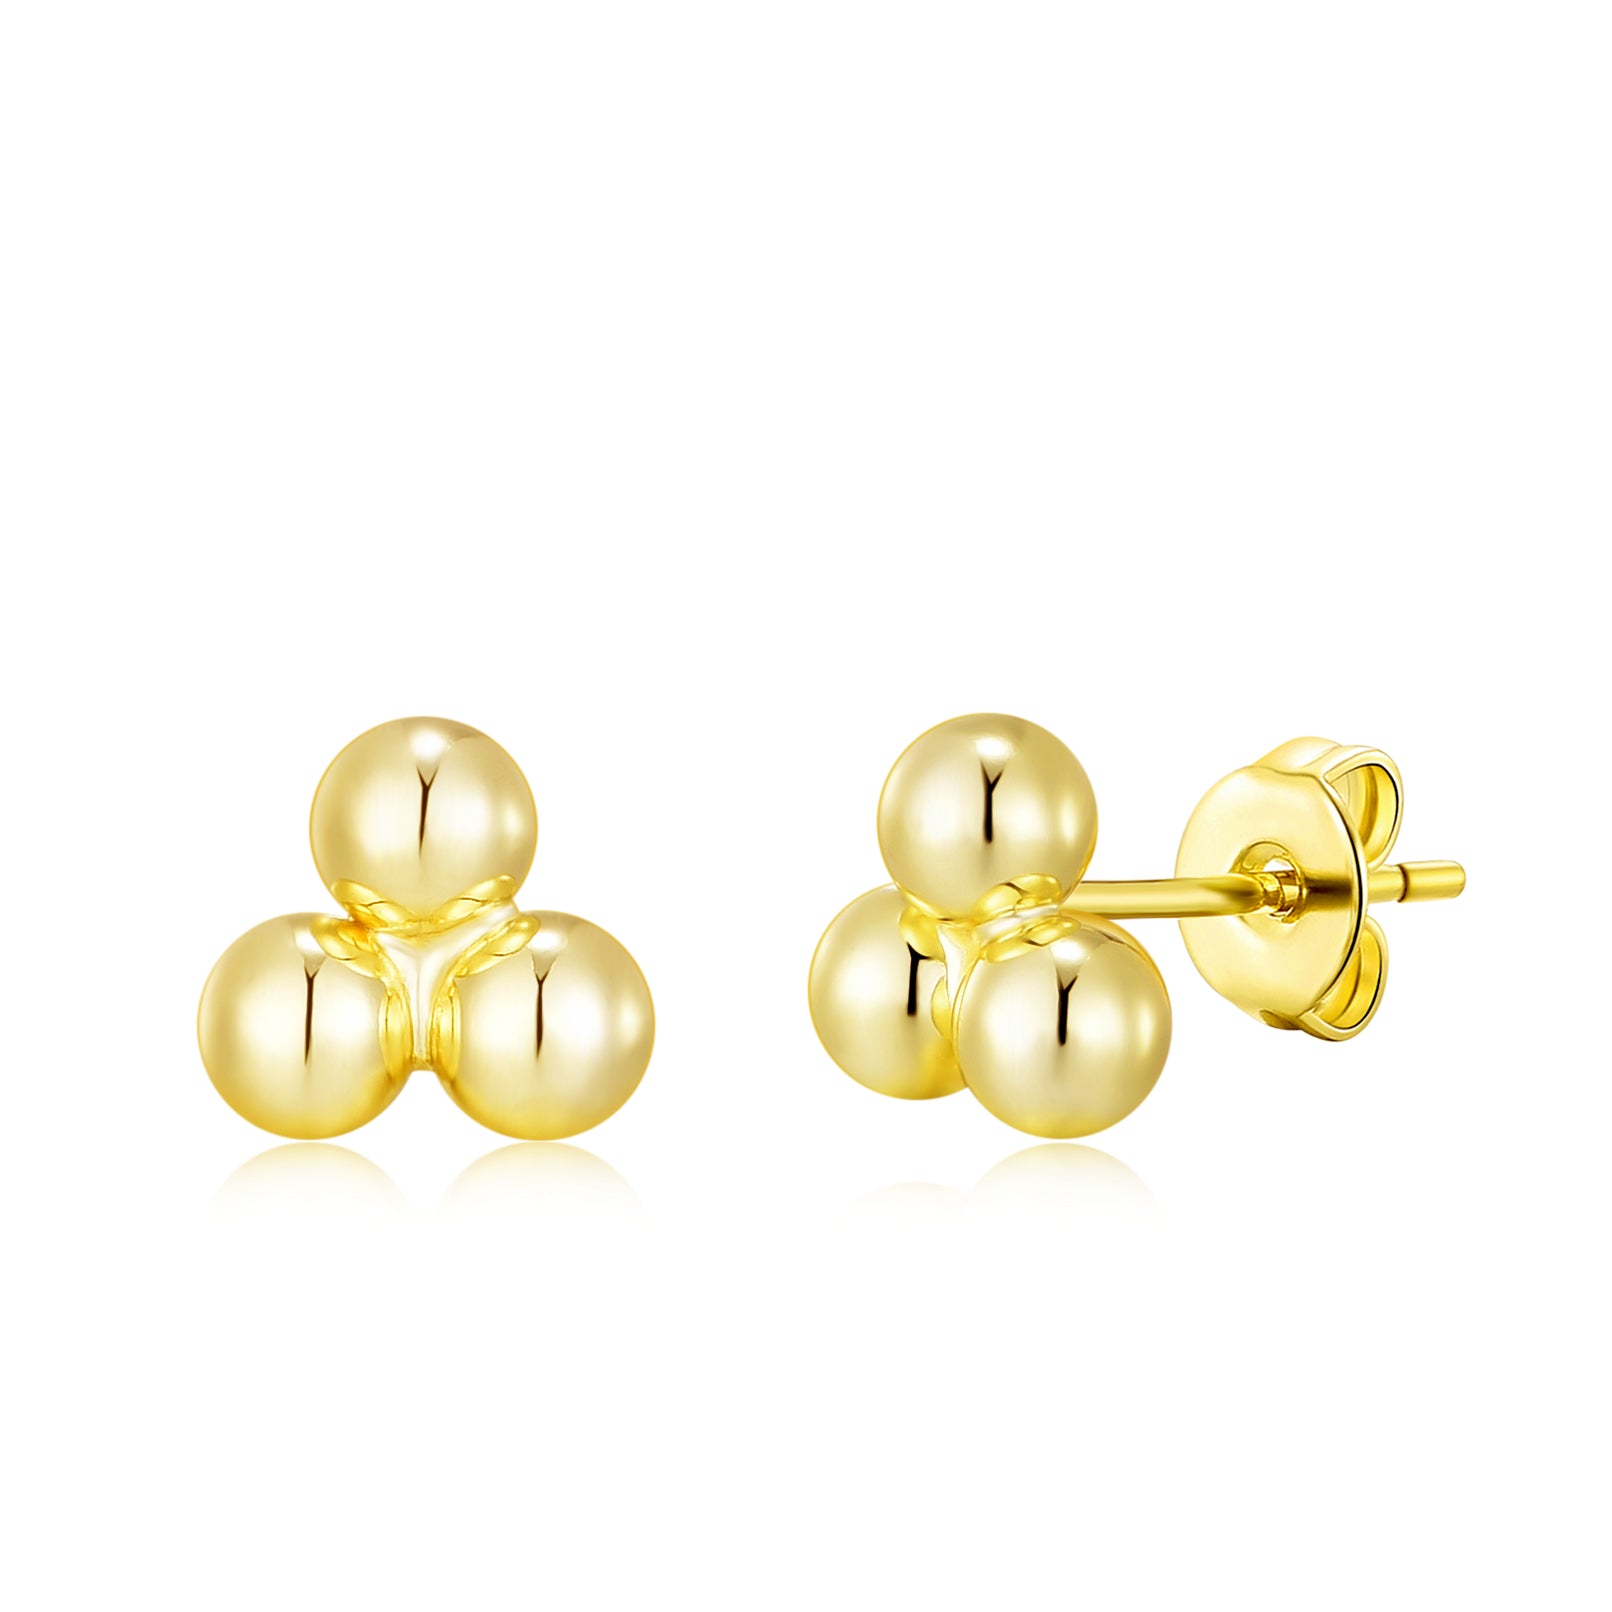 Gold Plated Trinity Earrings by Philip Jones Jewellery